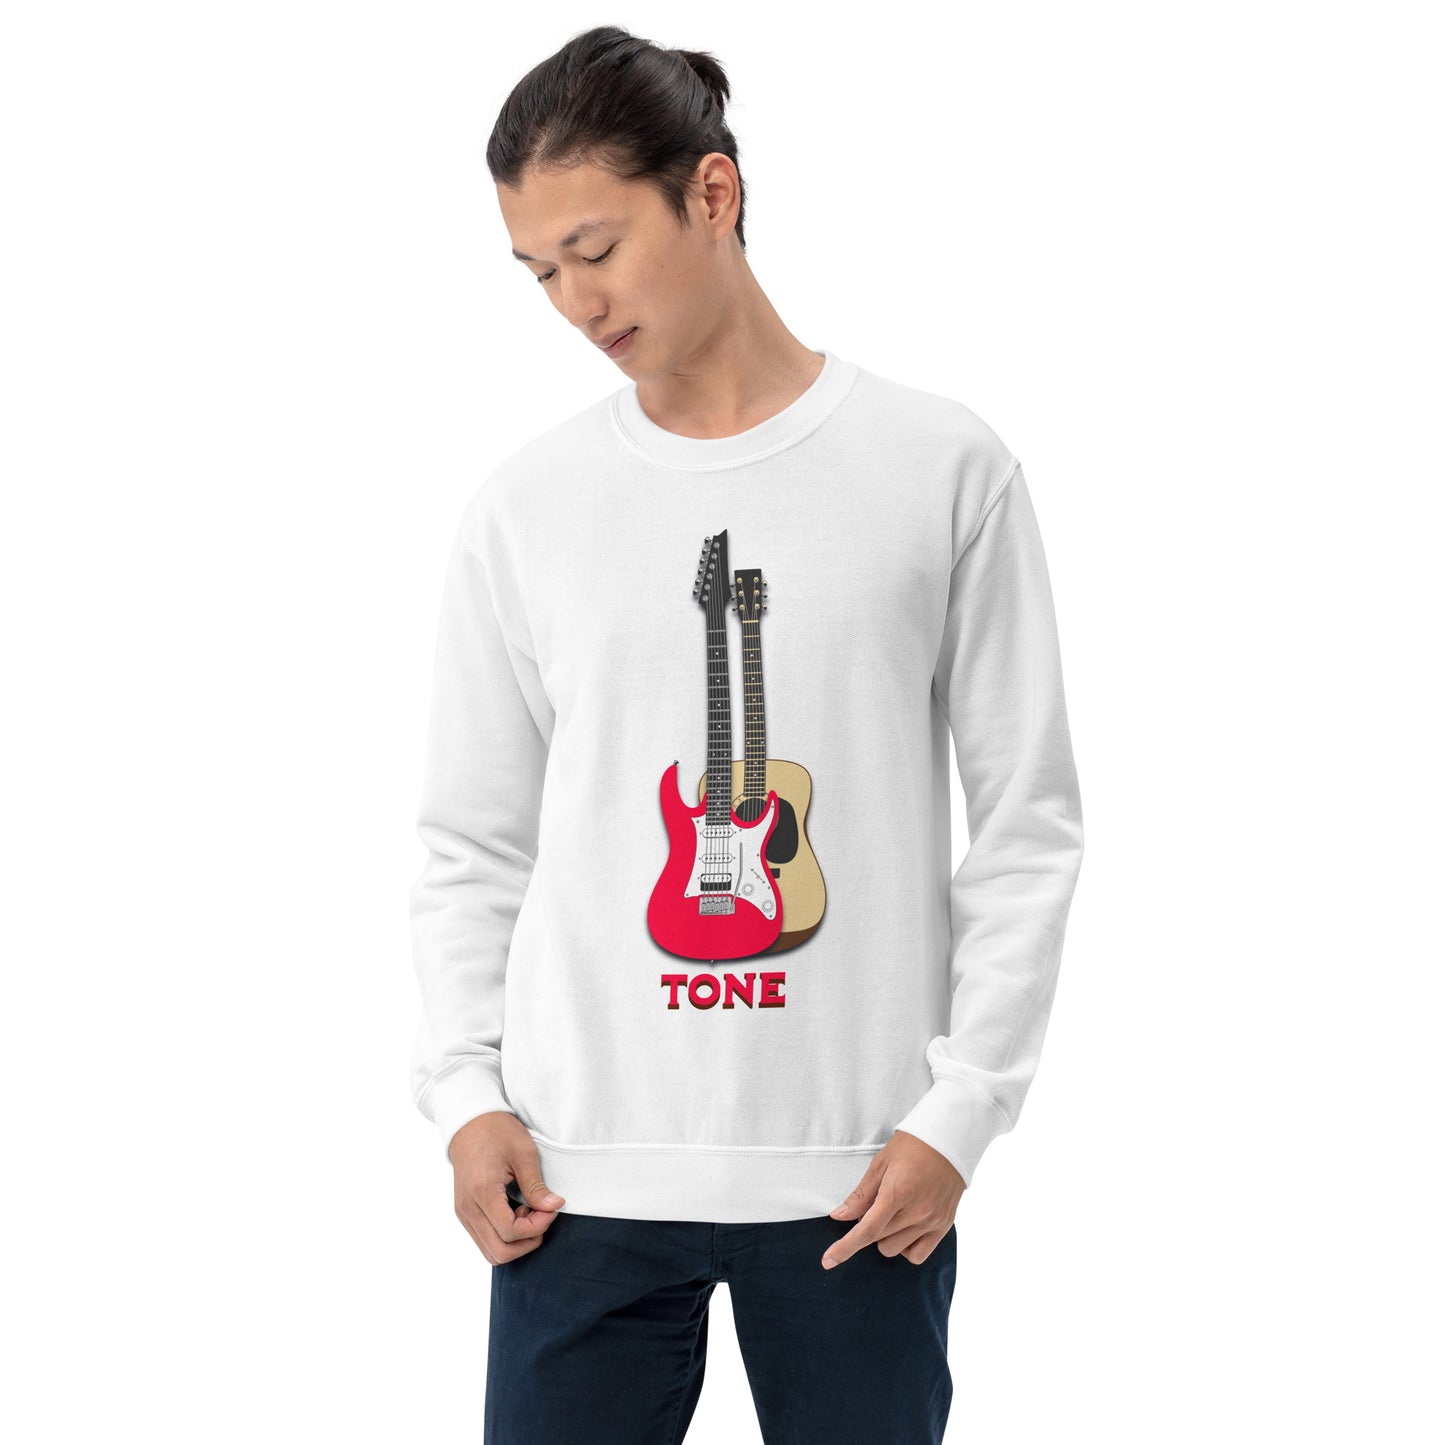 Two Tone Guitars Unisex Sweatshirt